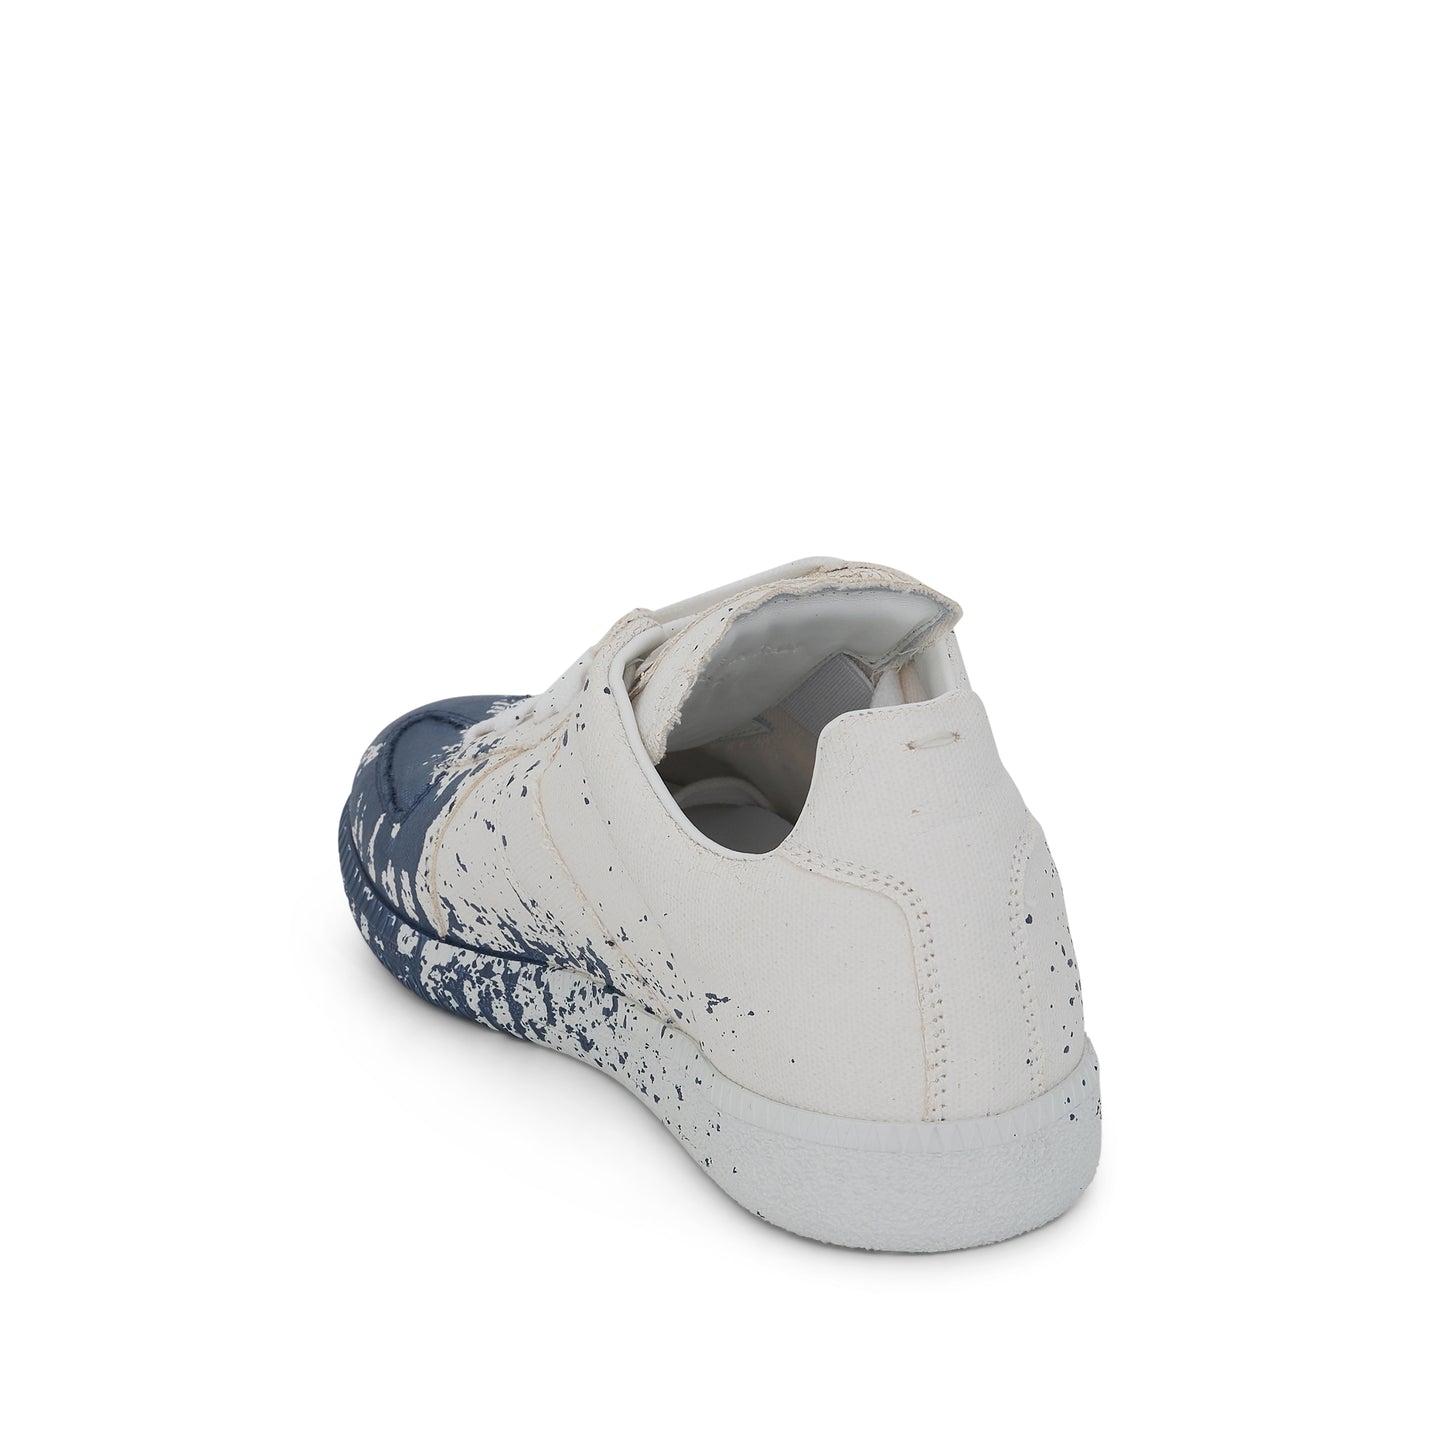 Replica Sneaker in White/Ming